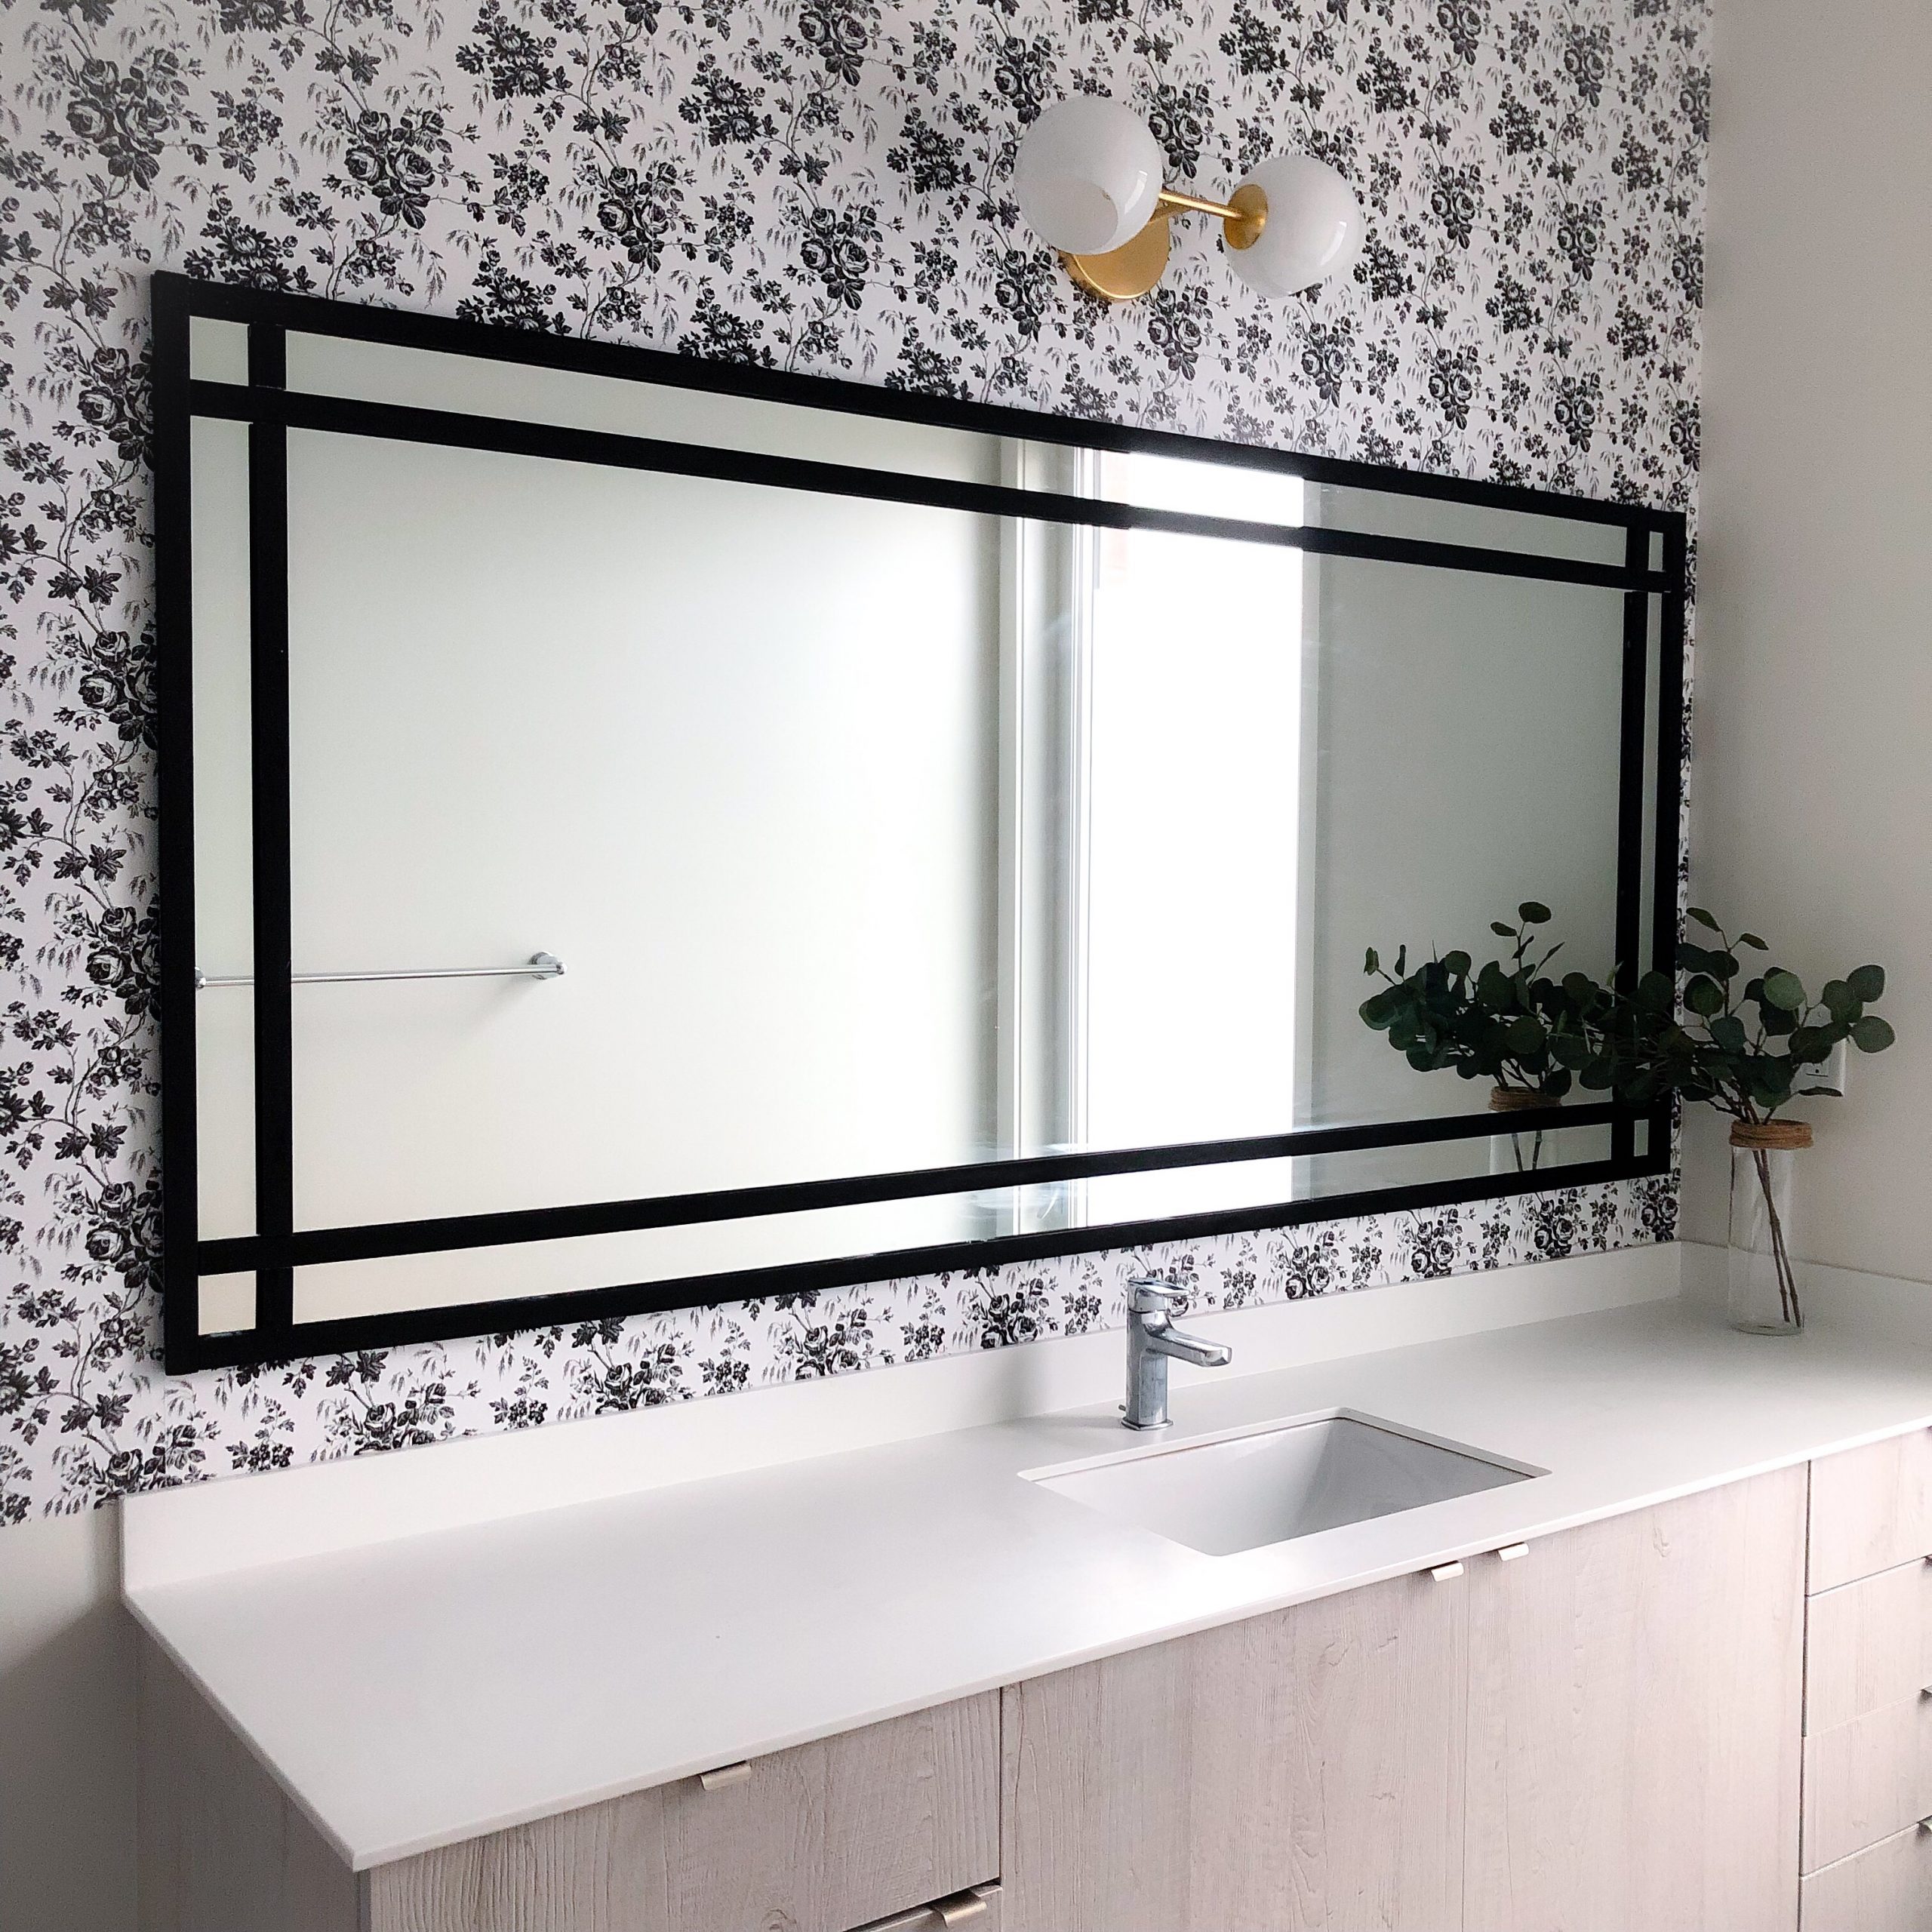 20 Easy & Creative DIY Mirror Frame Ideas